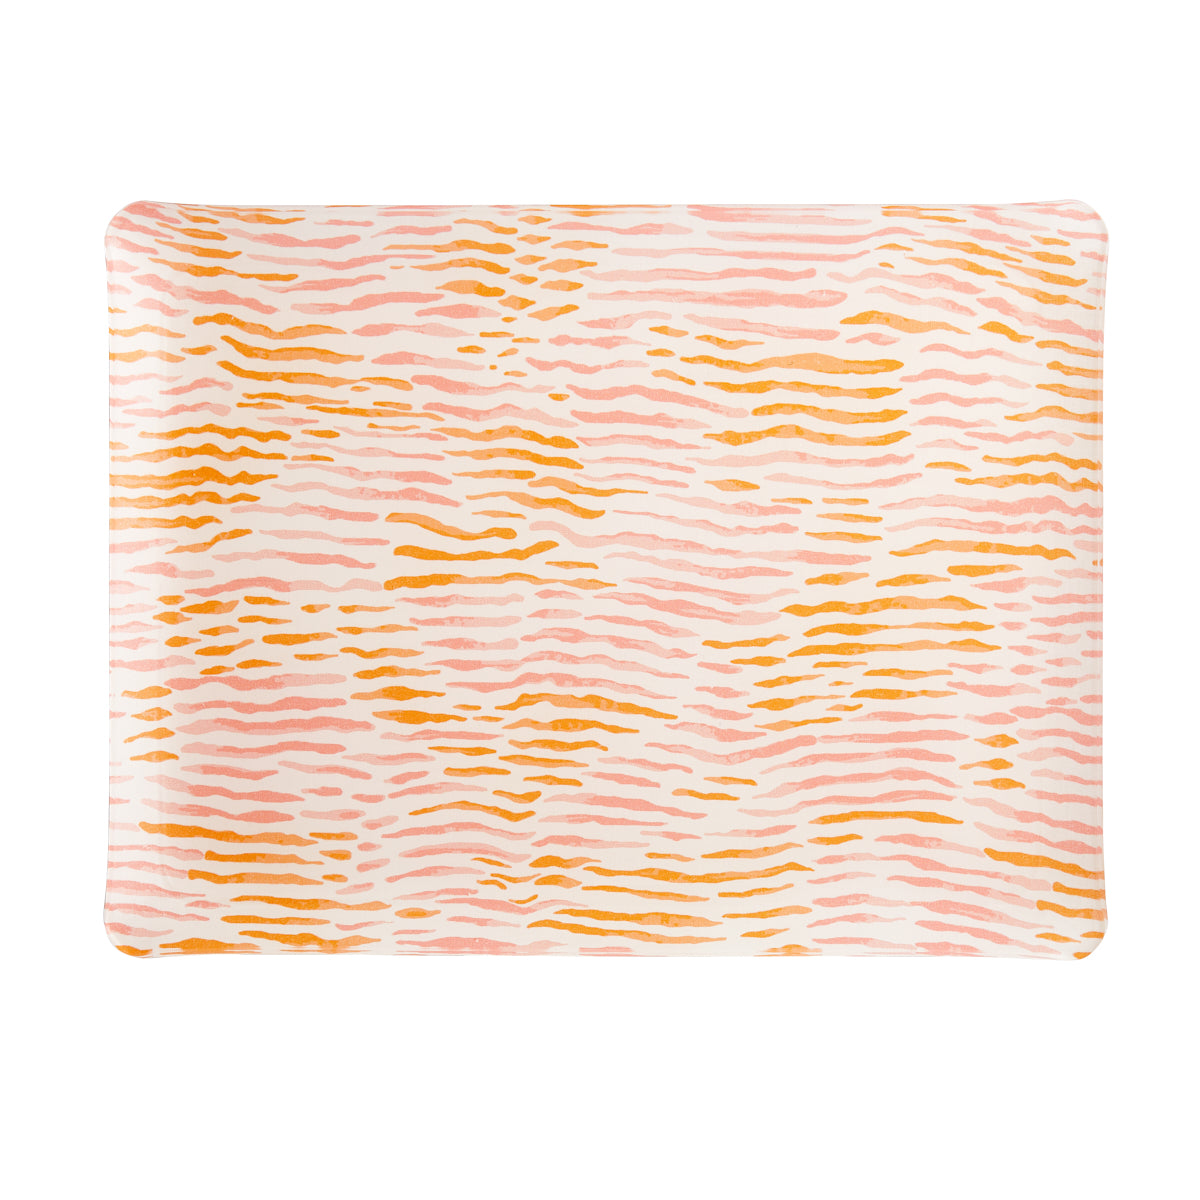 Nina Campbell Fabric Tray Medium - Arles Pink/Orange